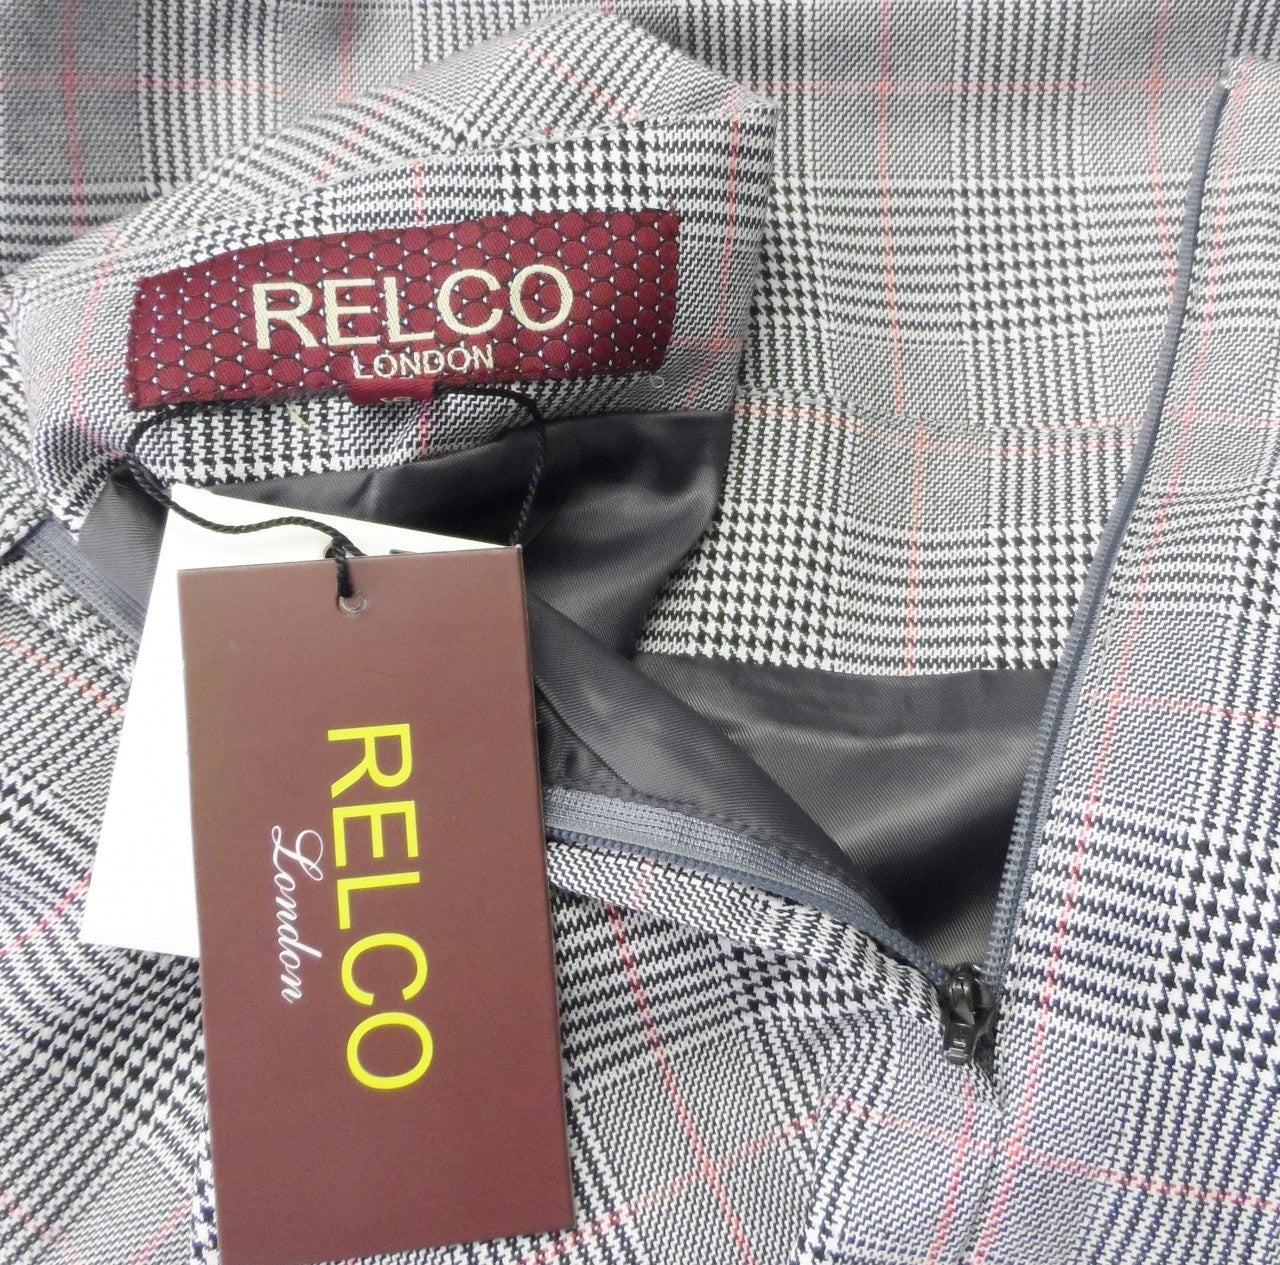 Relcoレディース レトロ ルード ガール プリンス オブ ウェールズ ペンシル スカート